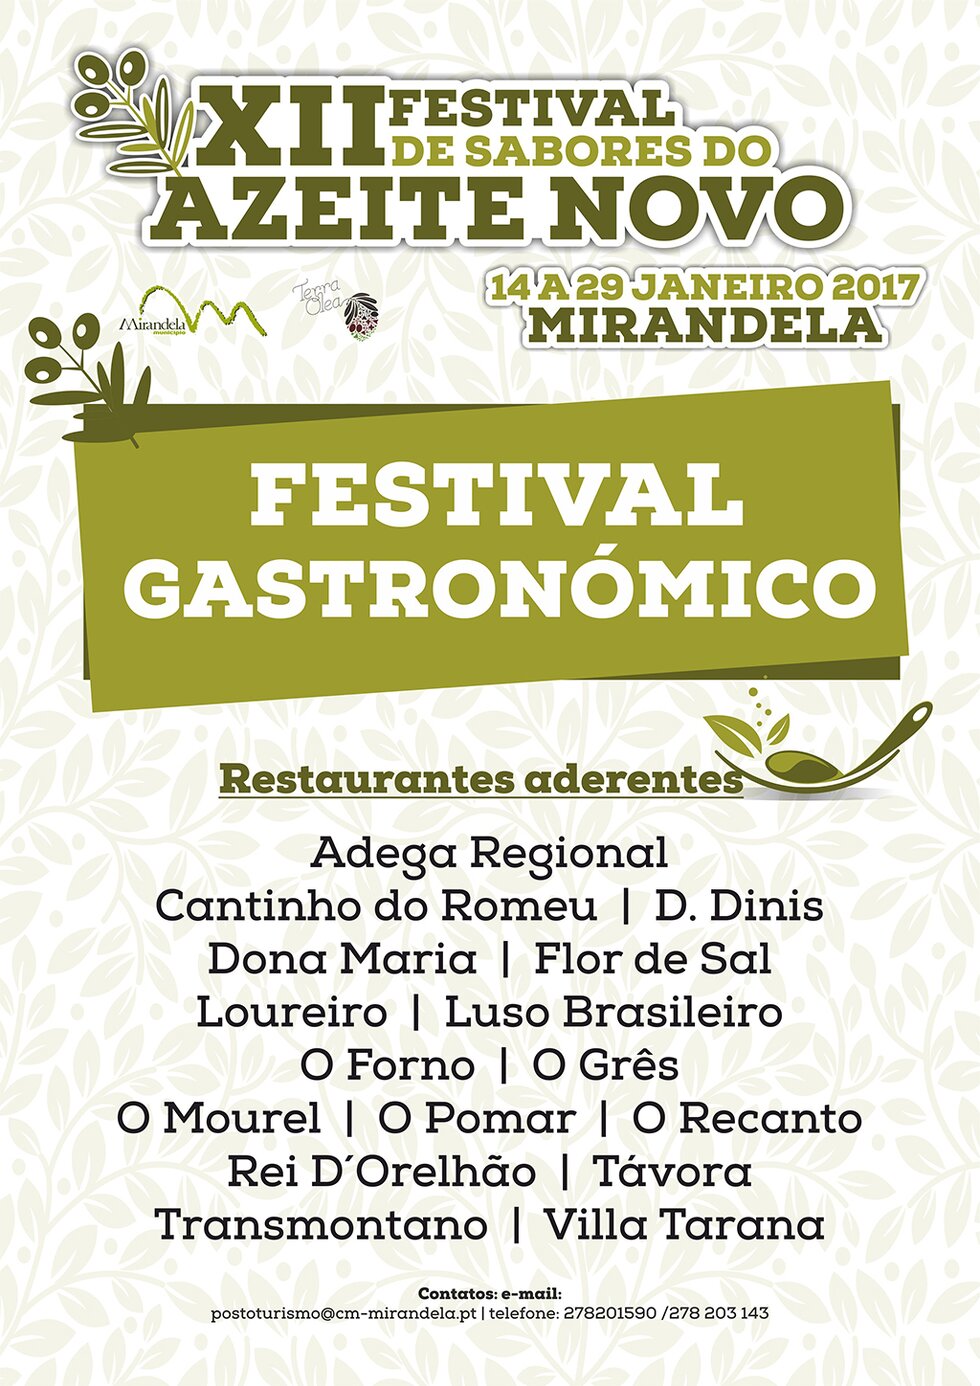 14_29_JAN_festival_gastron_mico_azeite_novo_2017